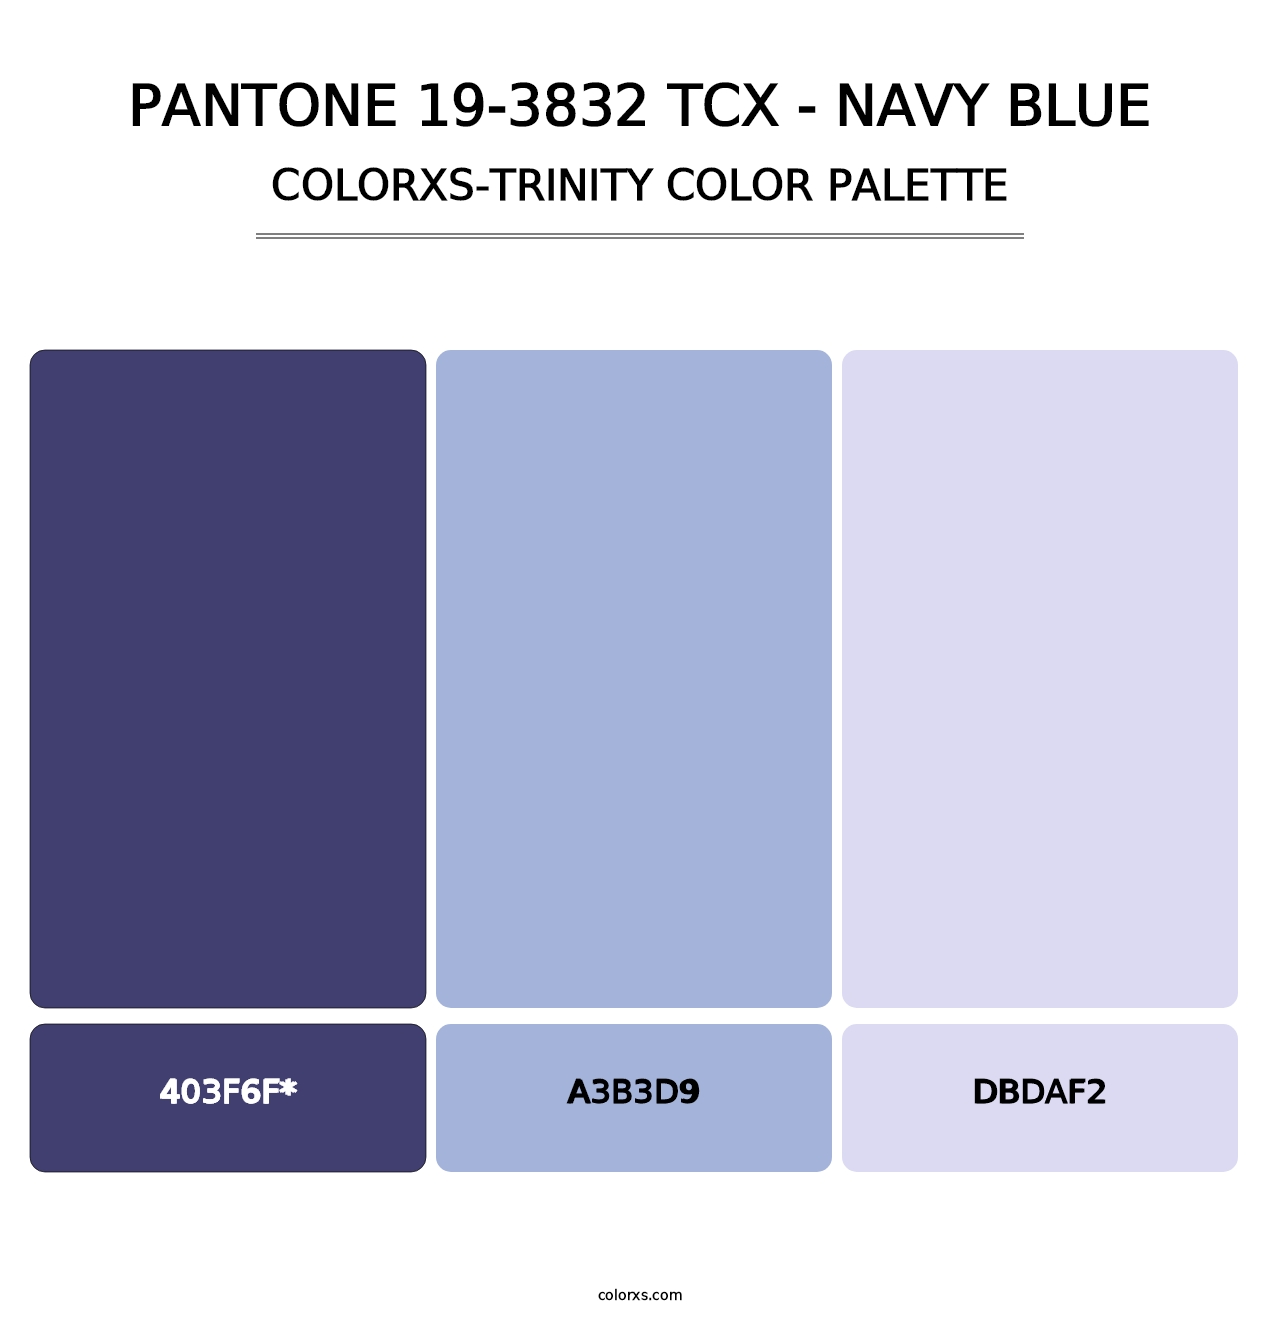 PANTONE 19-3832 TCX - Navy Blue - Colorxs Trinity Palette